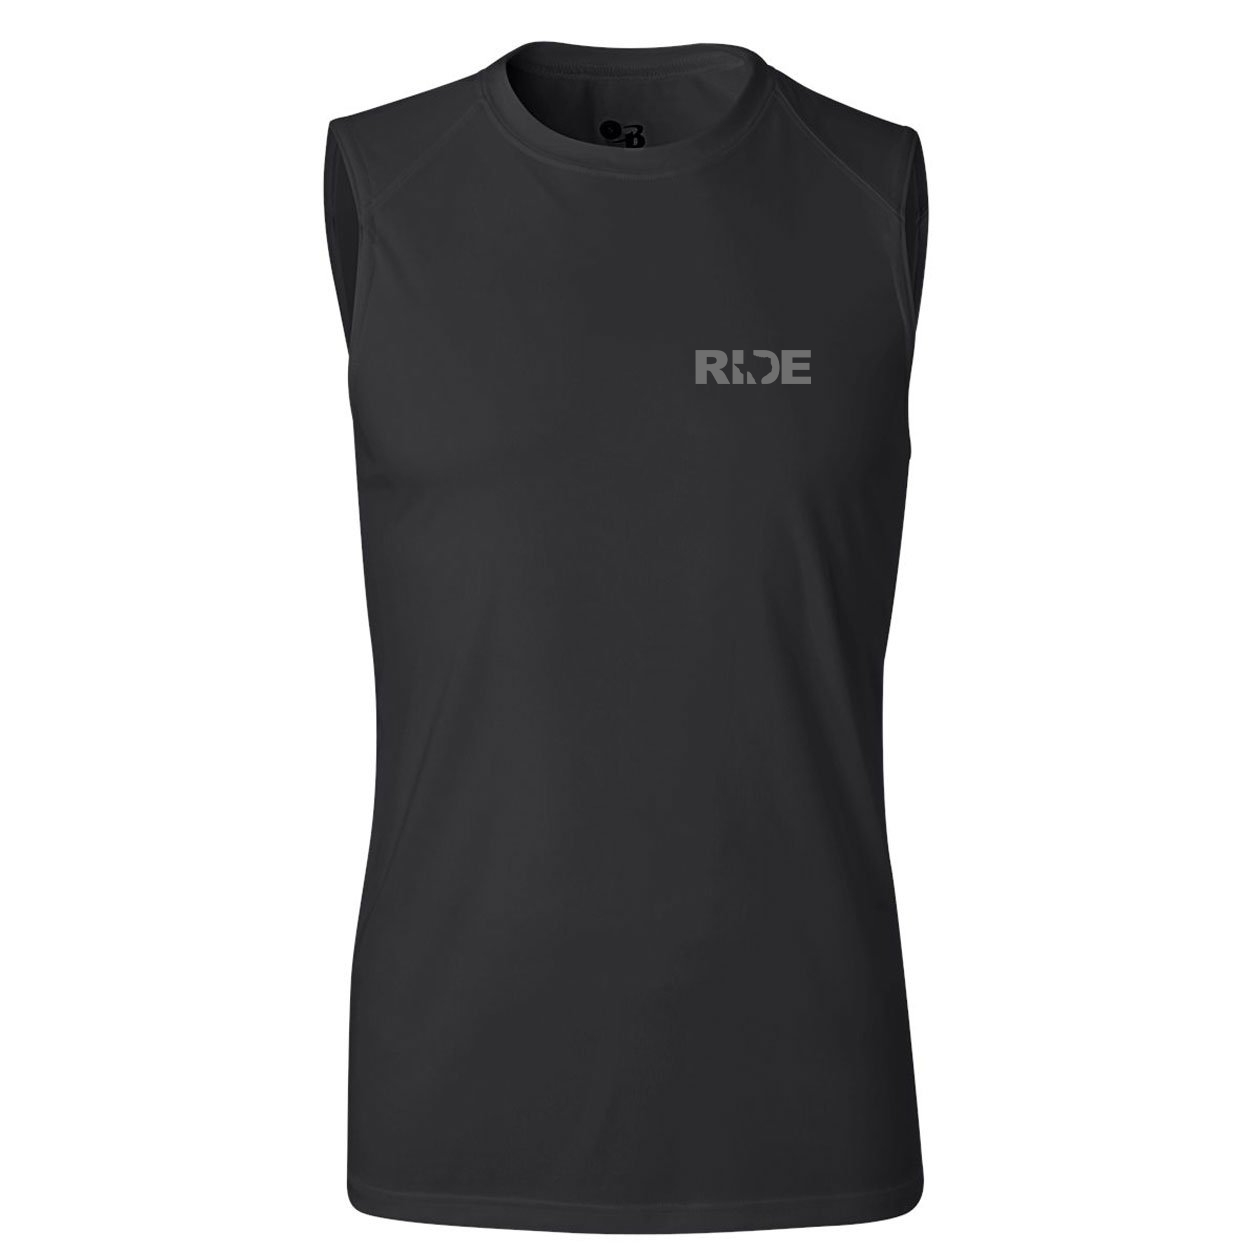 Ride Texas Night Out Unisex Performance Sleeveless T-Shirt Black (Gray Logo)